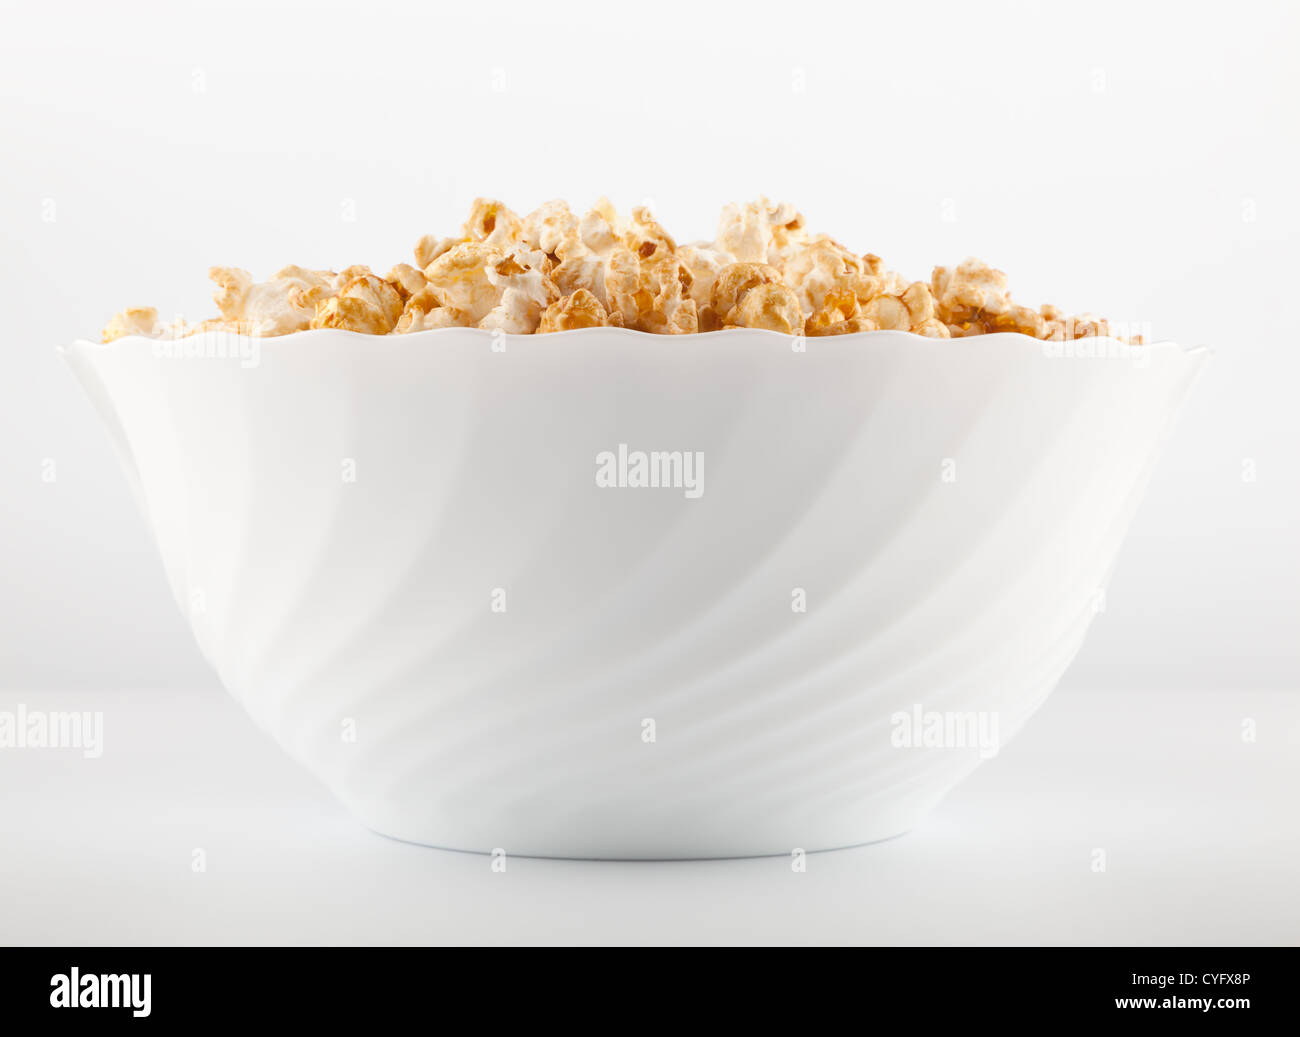 Big bowl of salty popcorn on light grey background Stock Photo